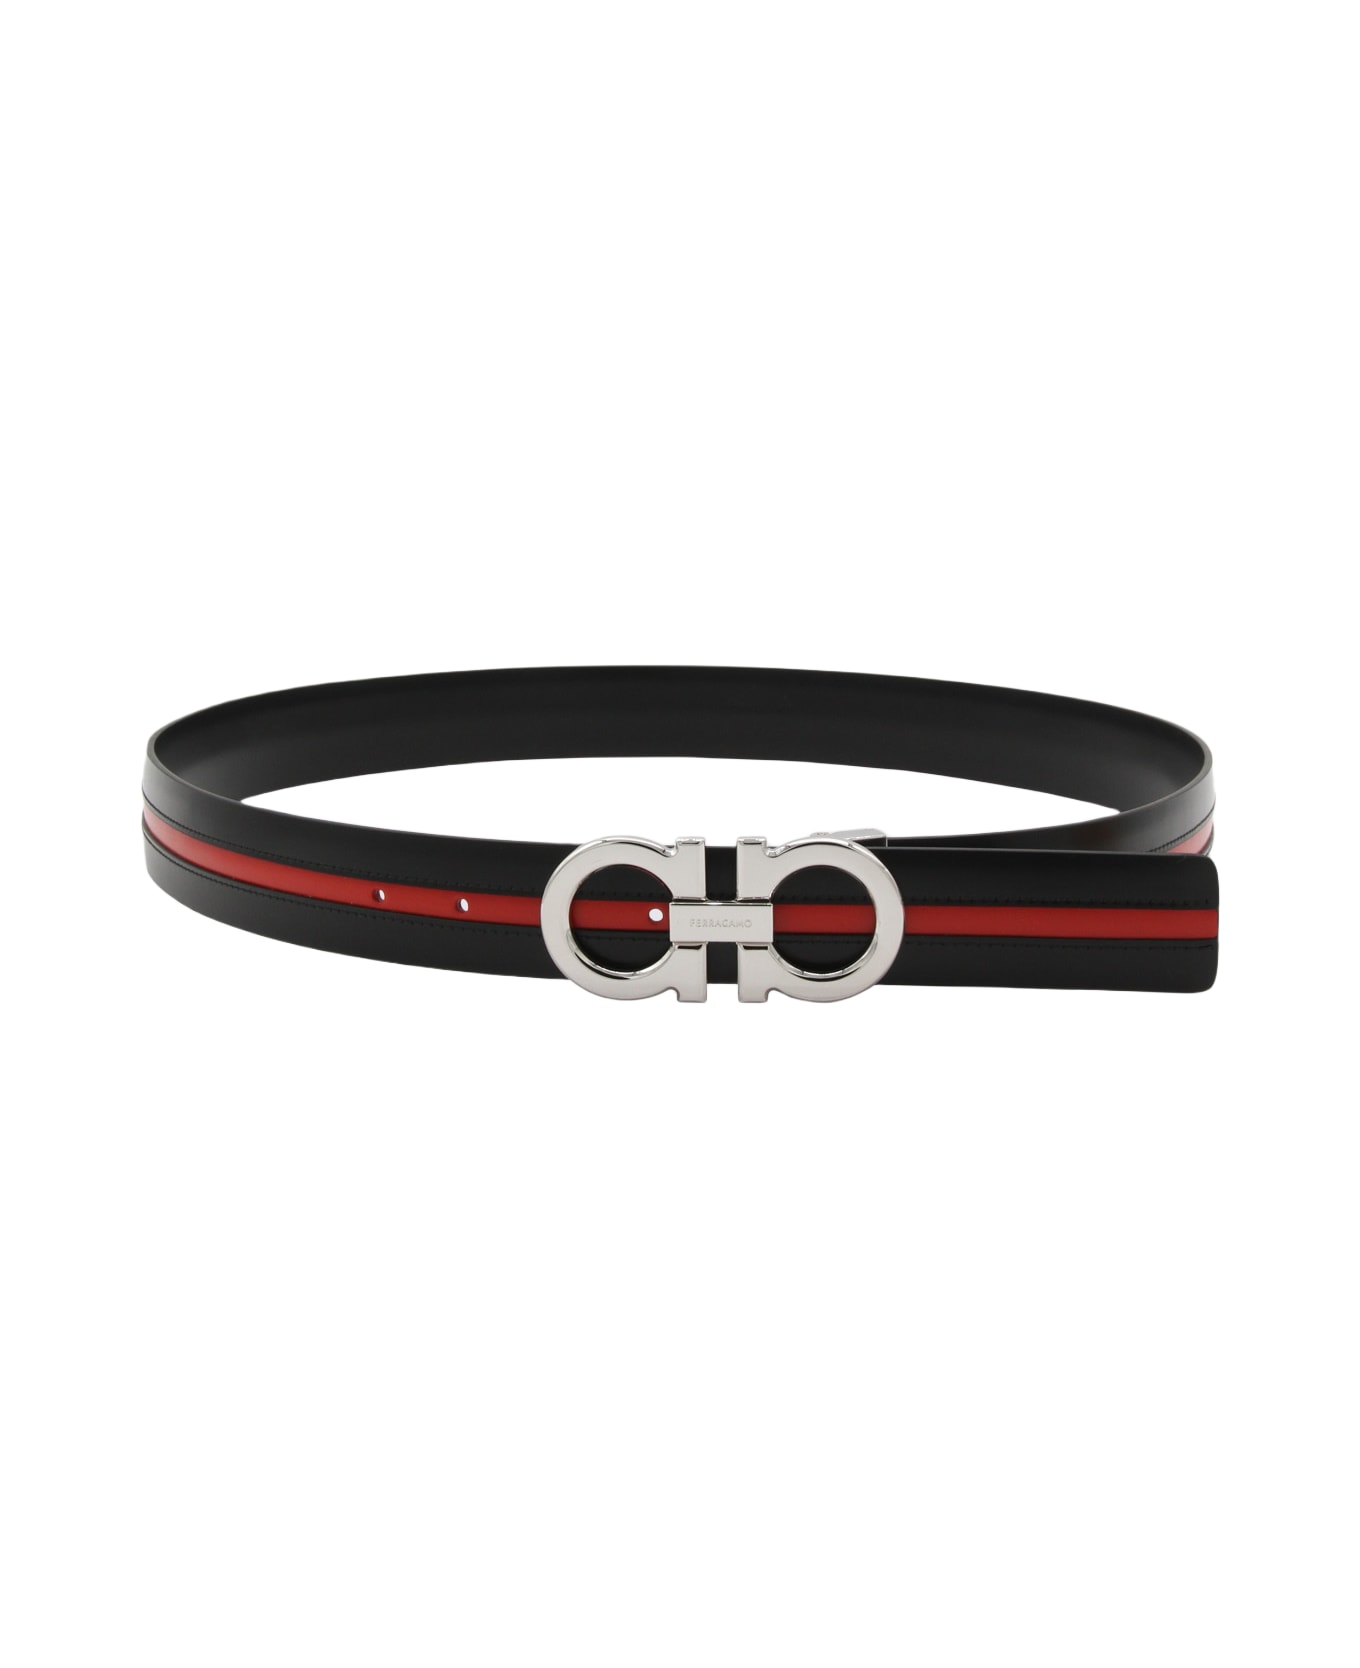 Ferragamo Black And Red Leather Band Gancini Belt - Black